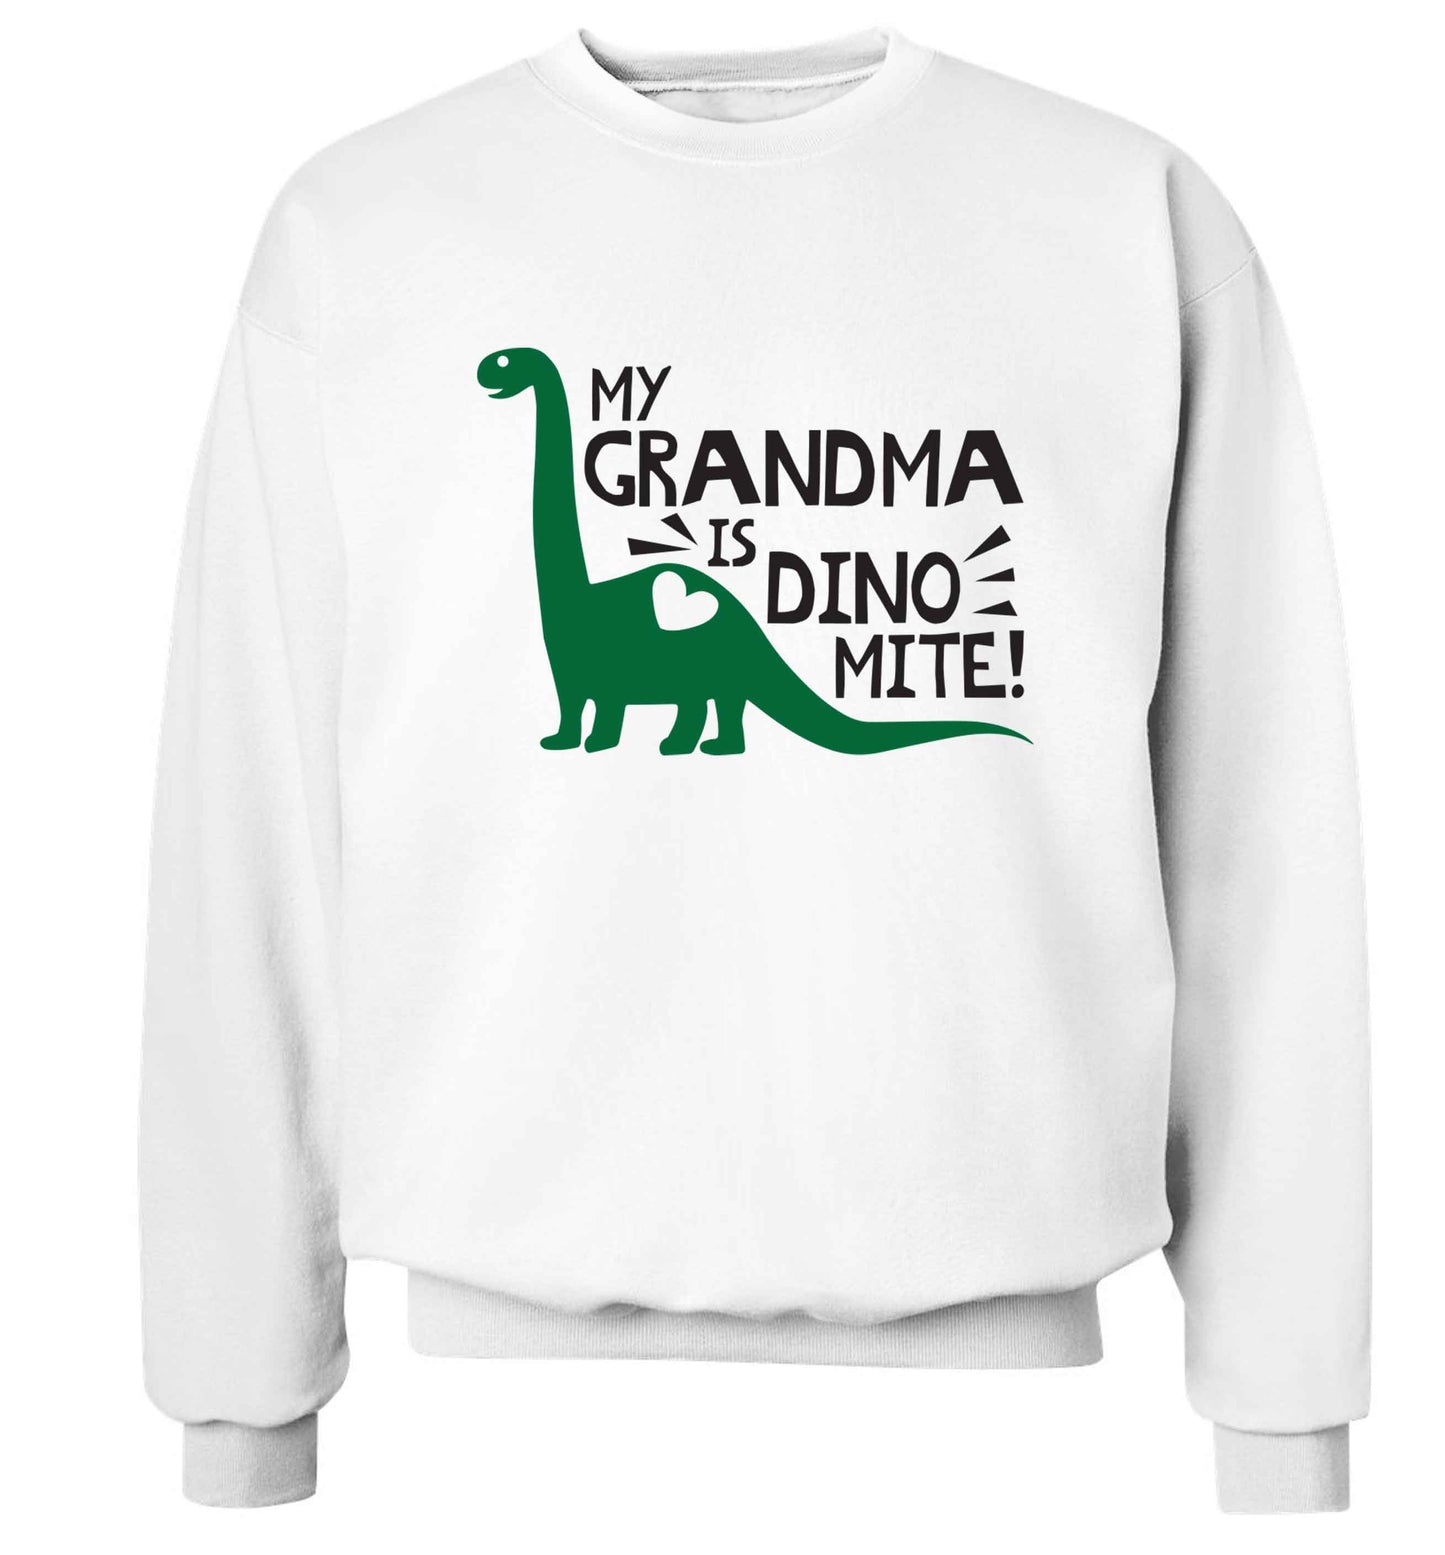 My grandma is dinomite! Adult's unisex white Sweater 2XL